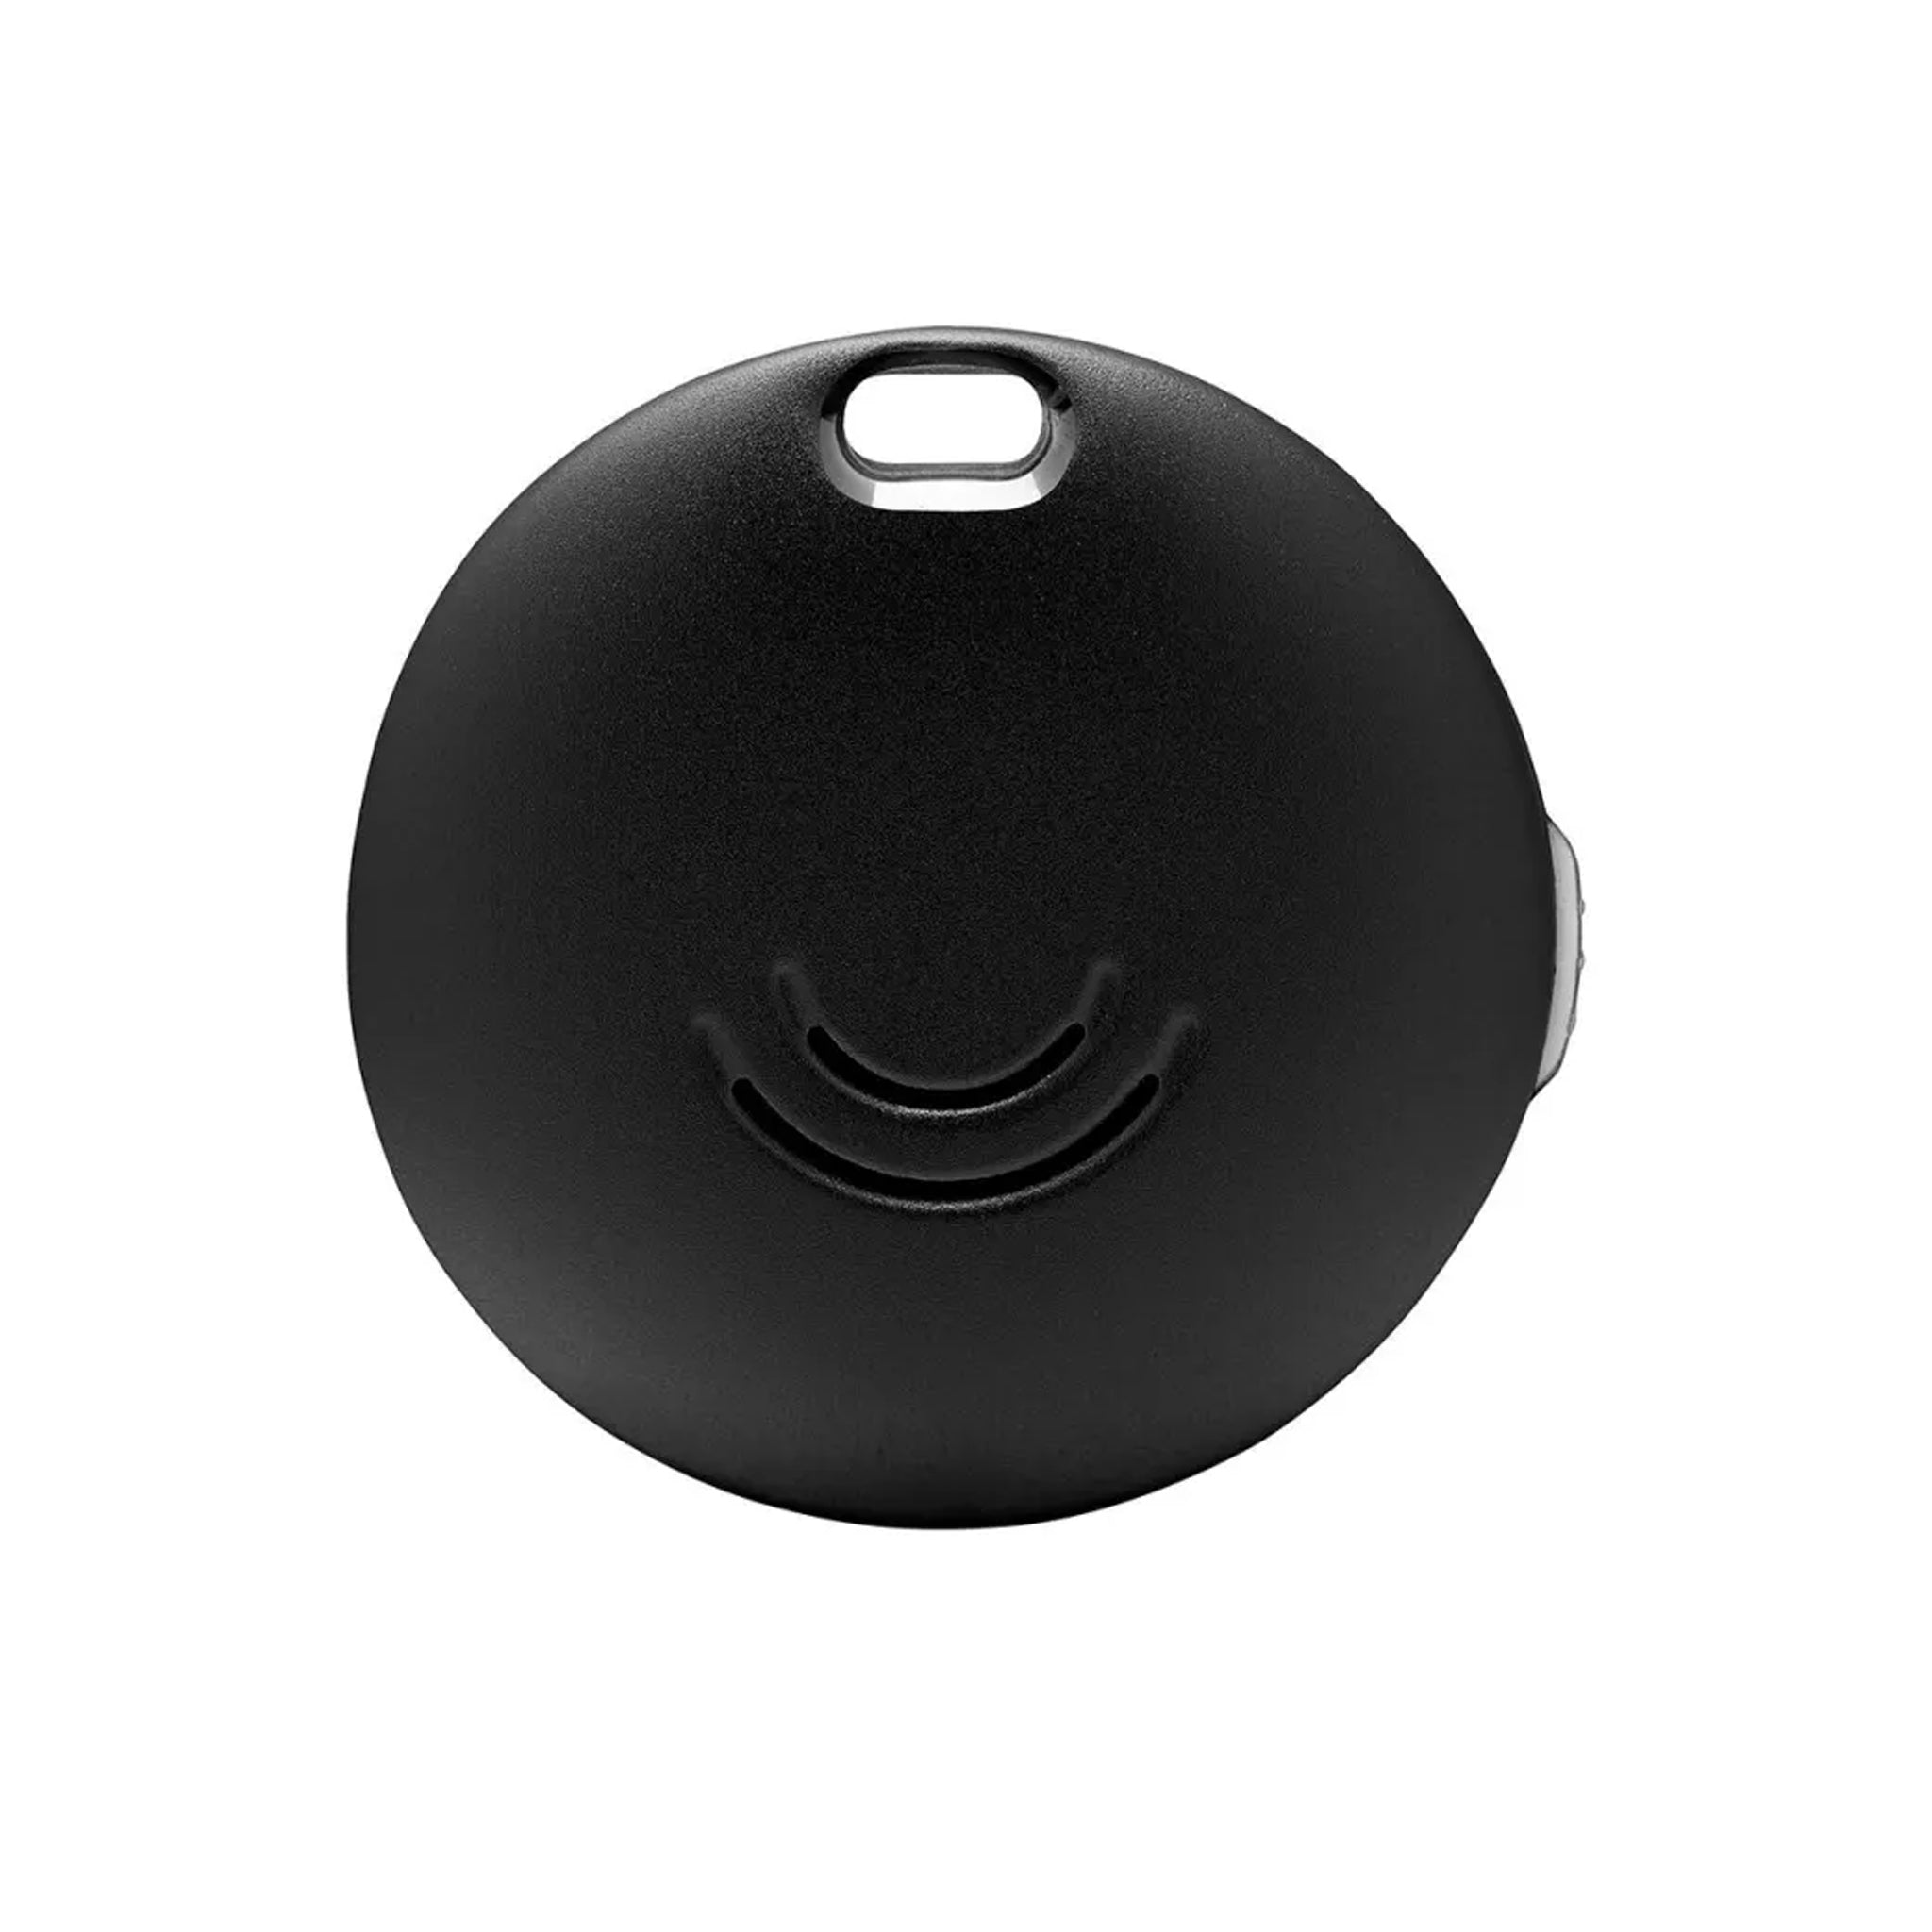 Orbit - Keys Bluetooth Tracking Device - Black